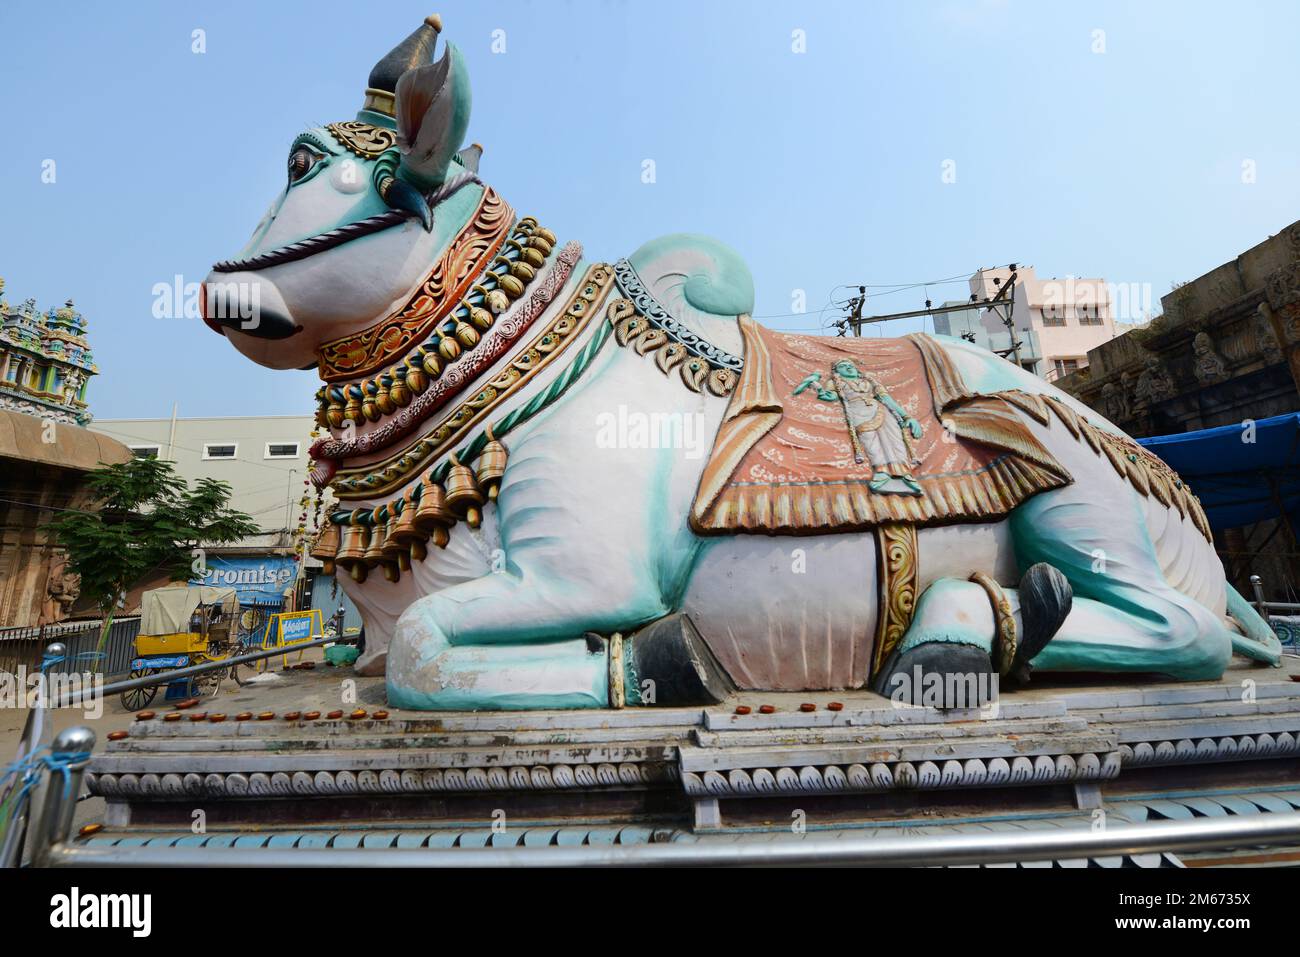 Nandi (Shiva’s bull) statue in a roundabout in the old city of Madurai, Tamil Nadu, India. Stock Photo